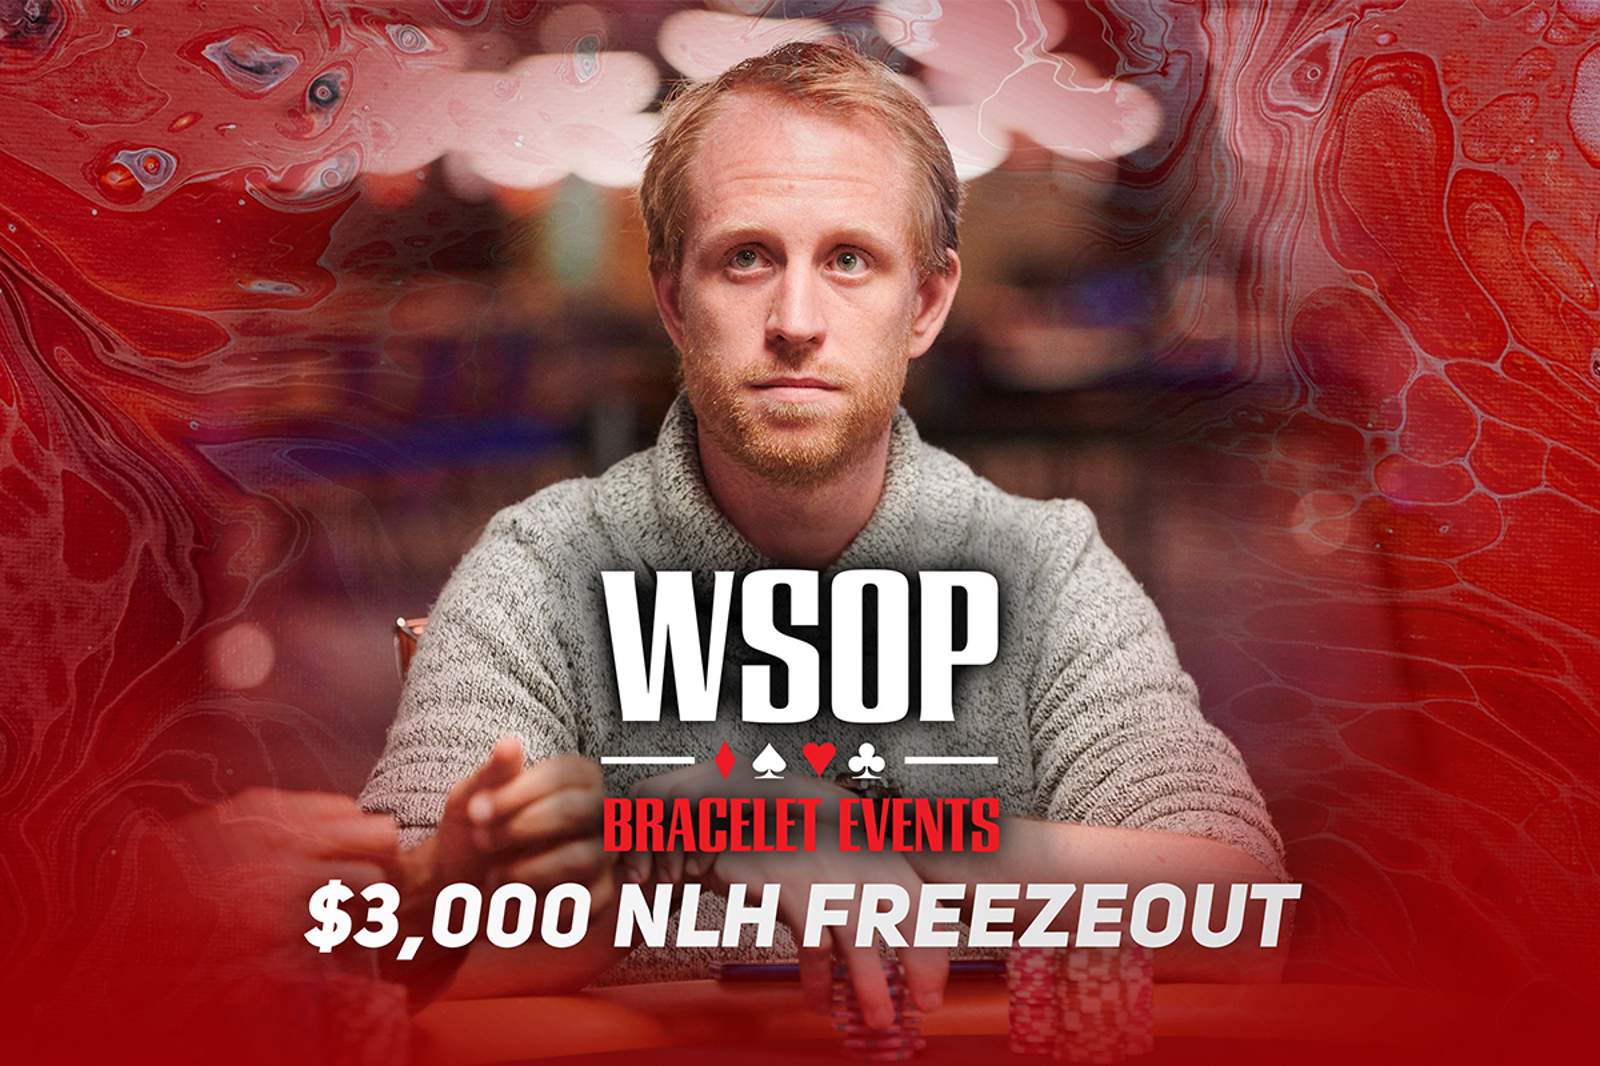 Watch the WSOP Event #13: $3,000 No-Limit Freezeout Final Table on PokerGO.com at 8 p.m. ET